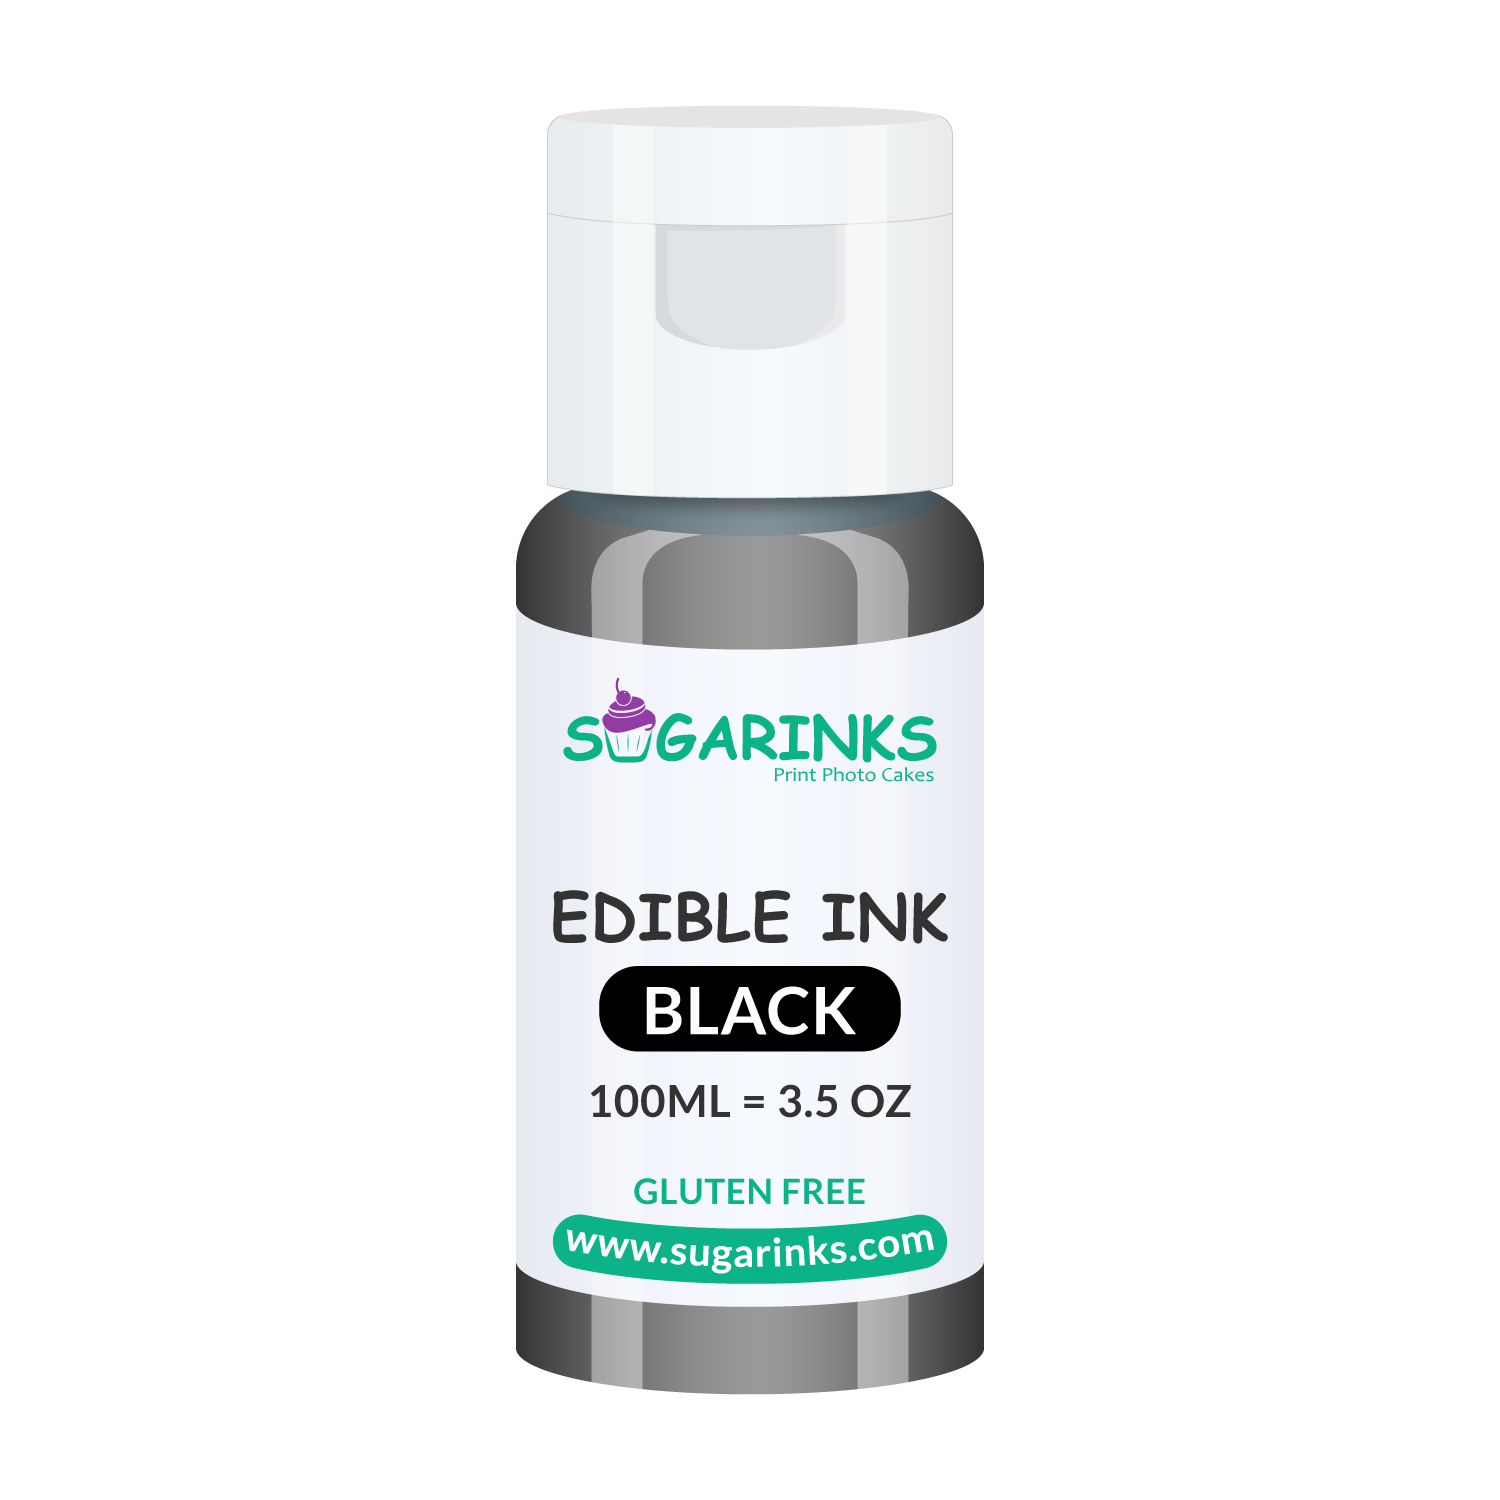 Sugarinks Edible Ink Refill for Epson Edible Printers (100ml/3.5Oz) – Black